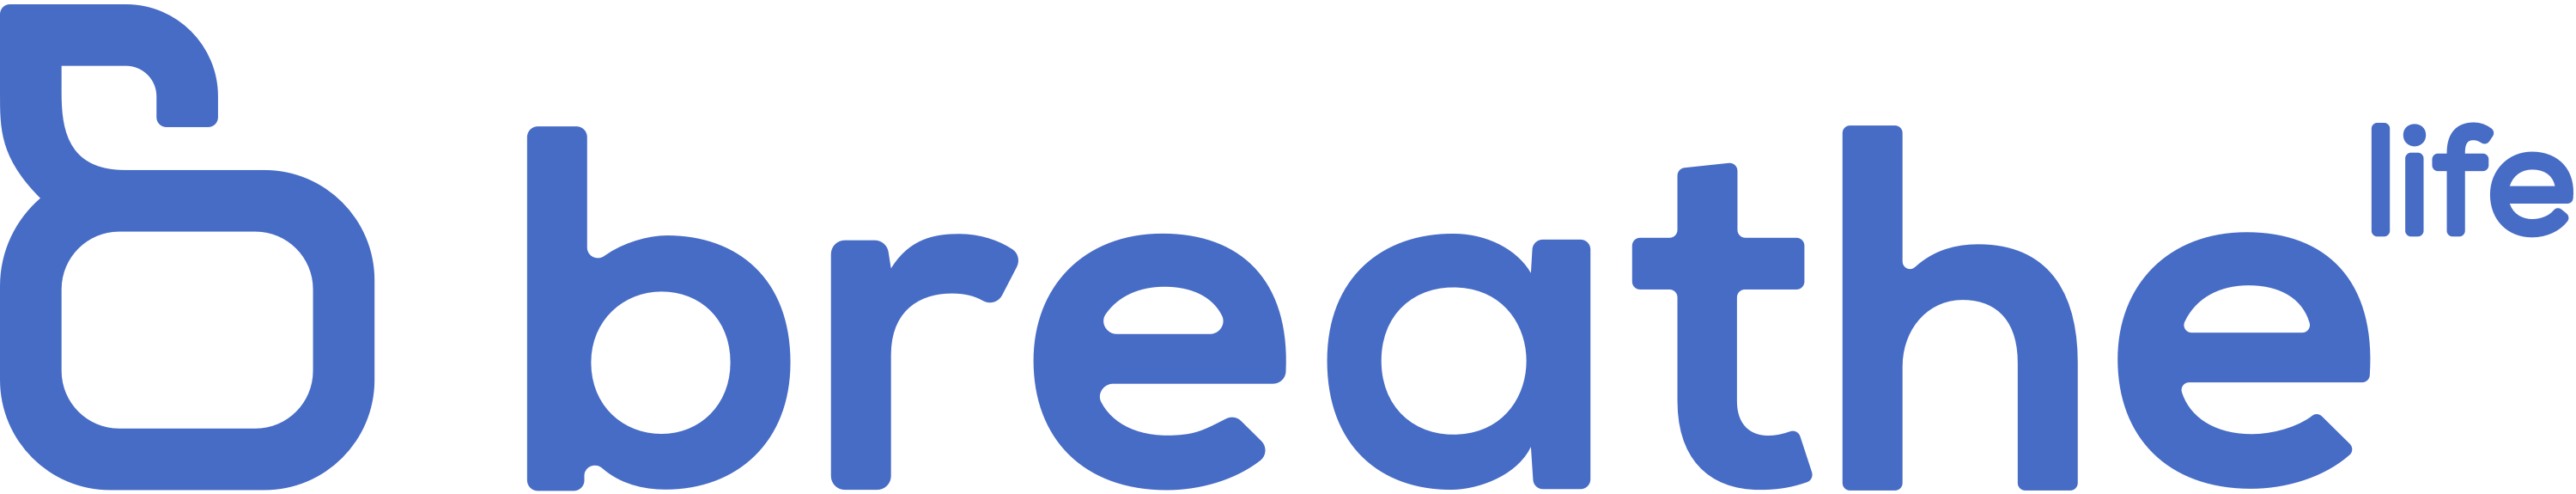 Logo Breathe Life - Blue (5).png